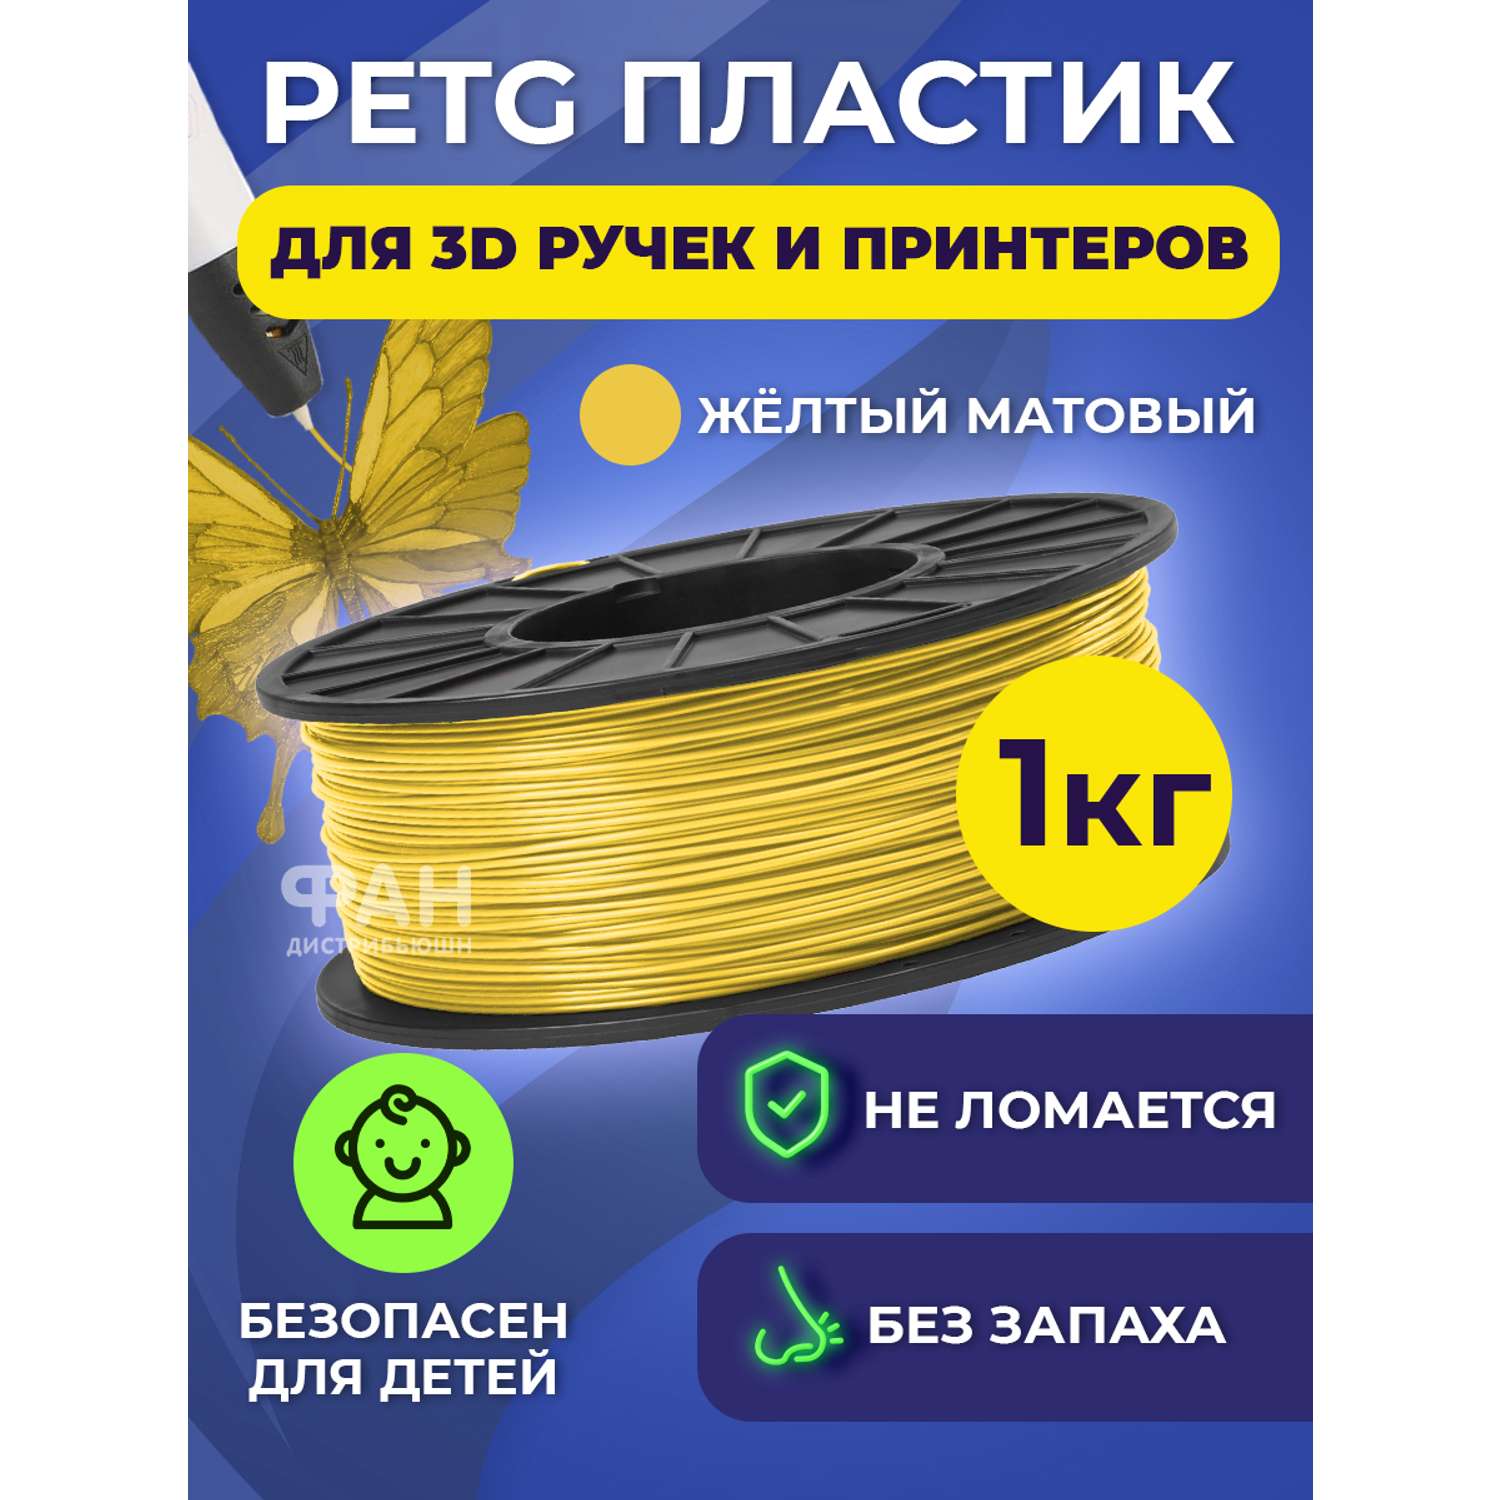 Пластик в катушке Funtasy PETG 1.75 мм 1 кг цвет желтый матовый - фото 2